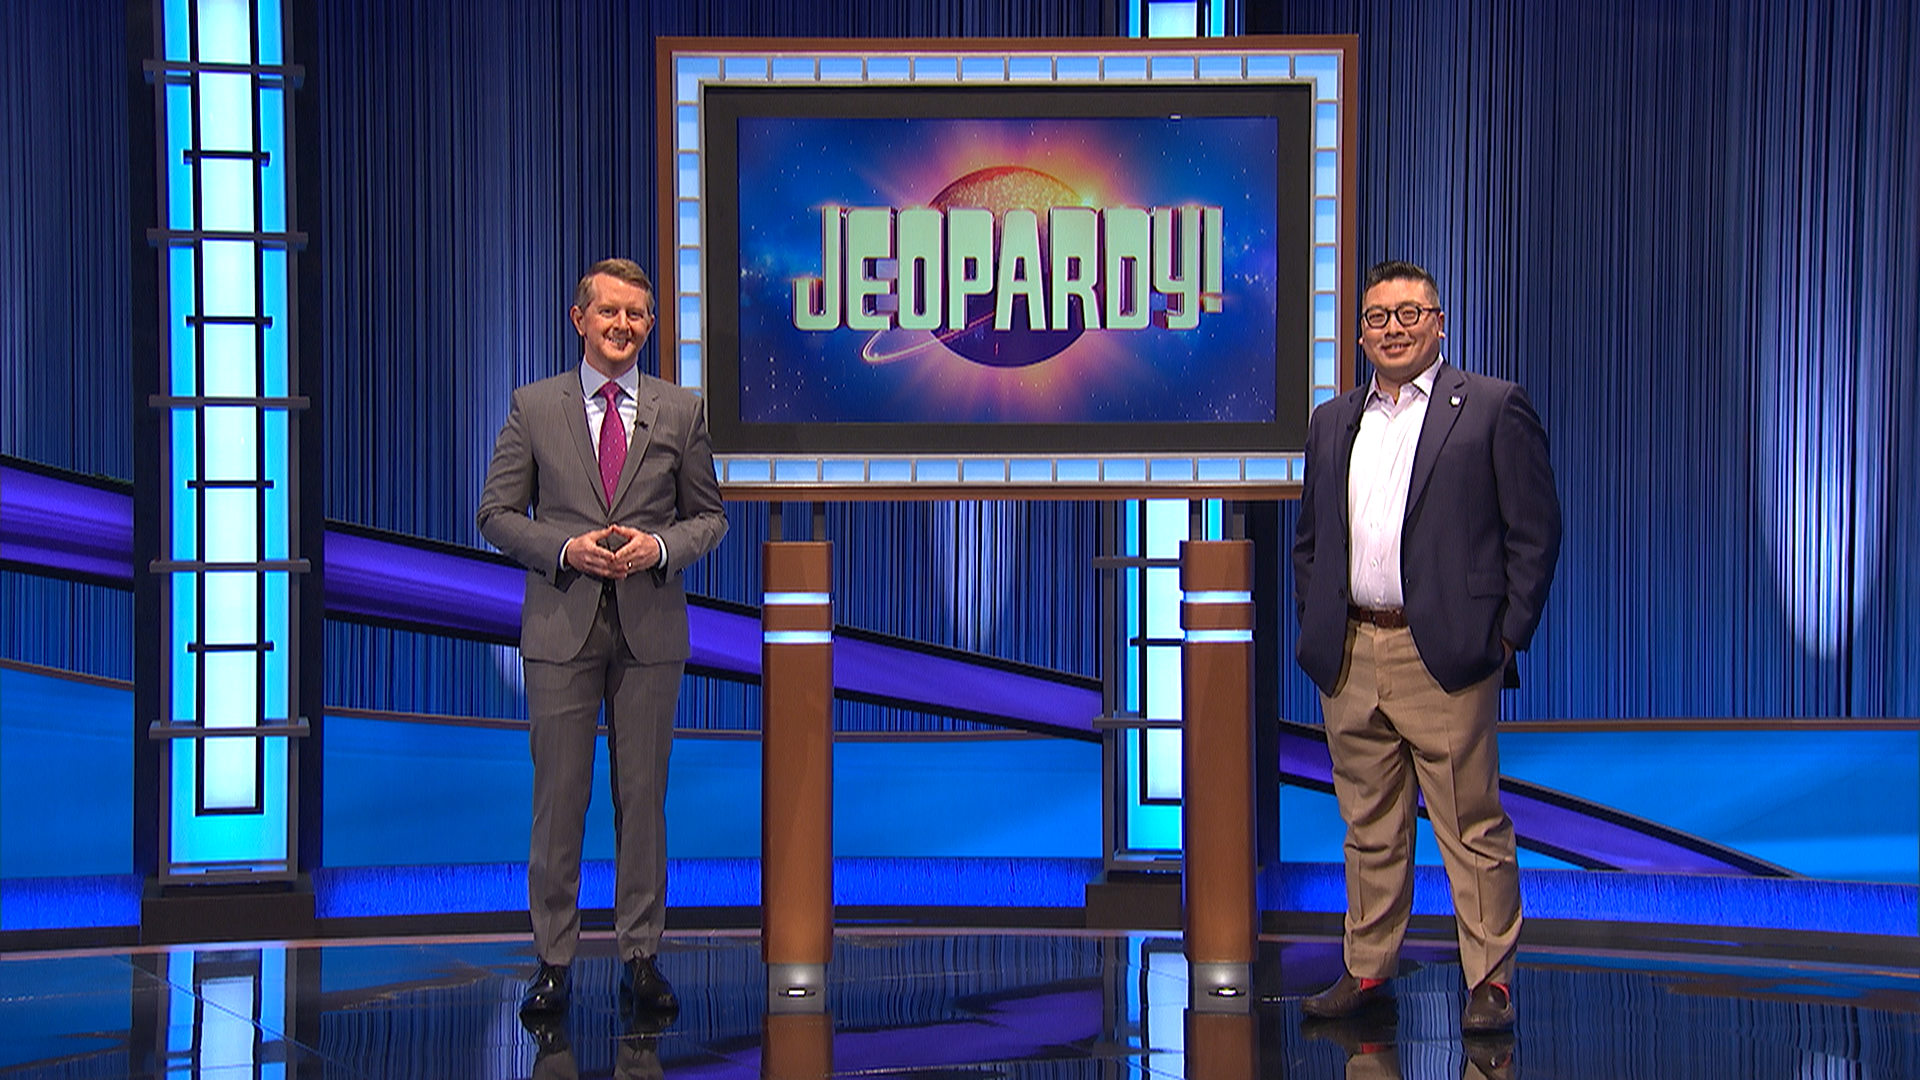 William Chou Jeopardy with Ken Jennings 1